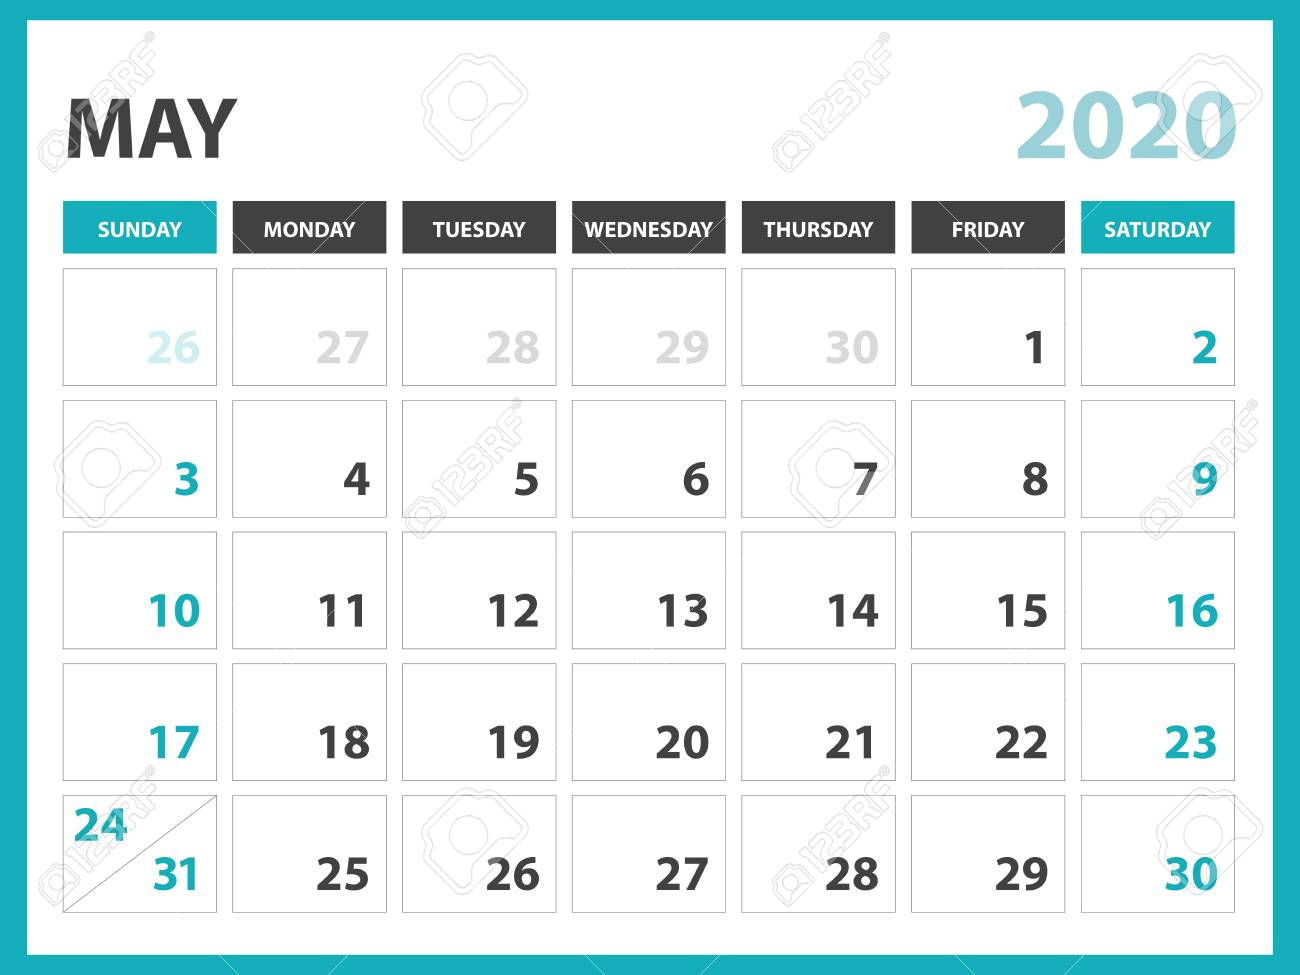 Desk Calendar Layout Size 8 X 6 Inch, May 2020 Calendar Template,..